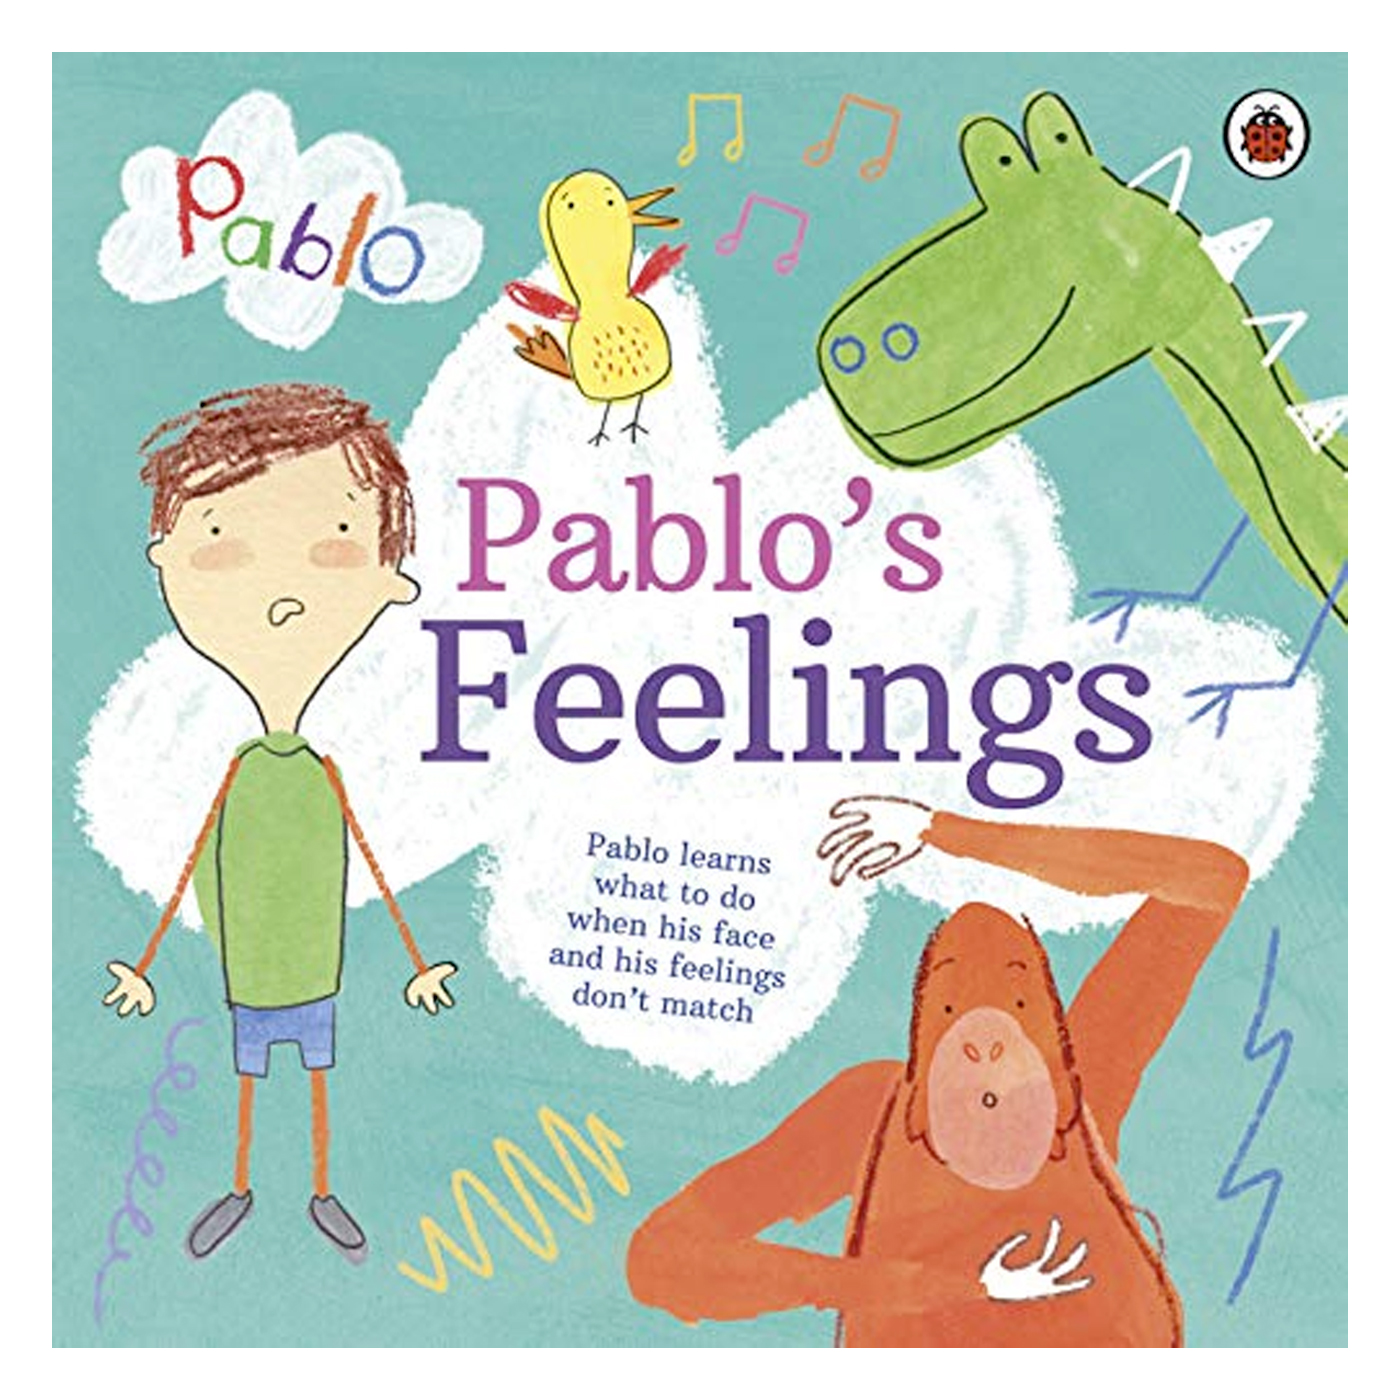  Pablo's Feeling